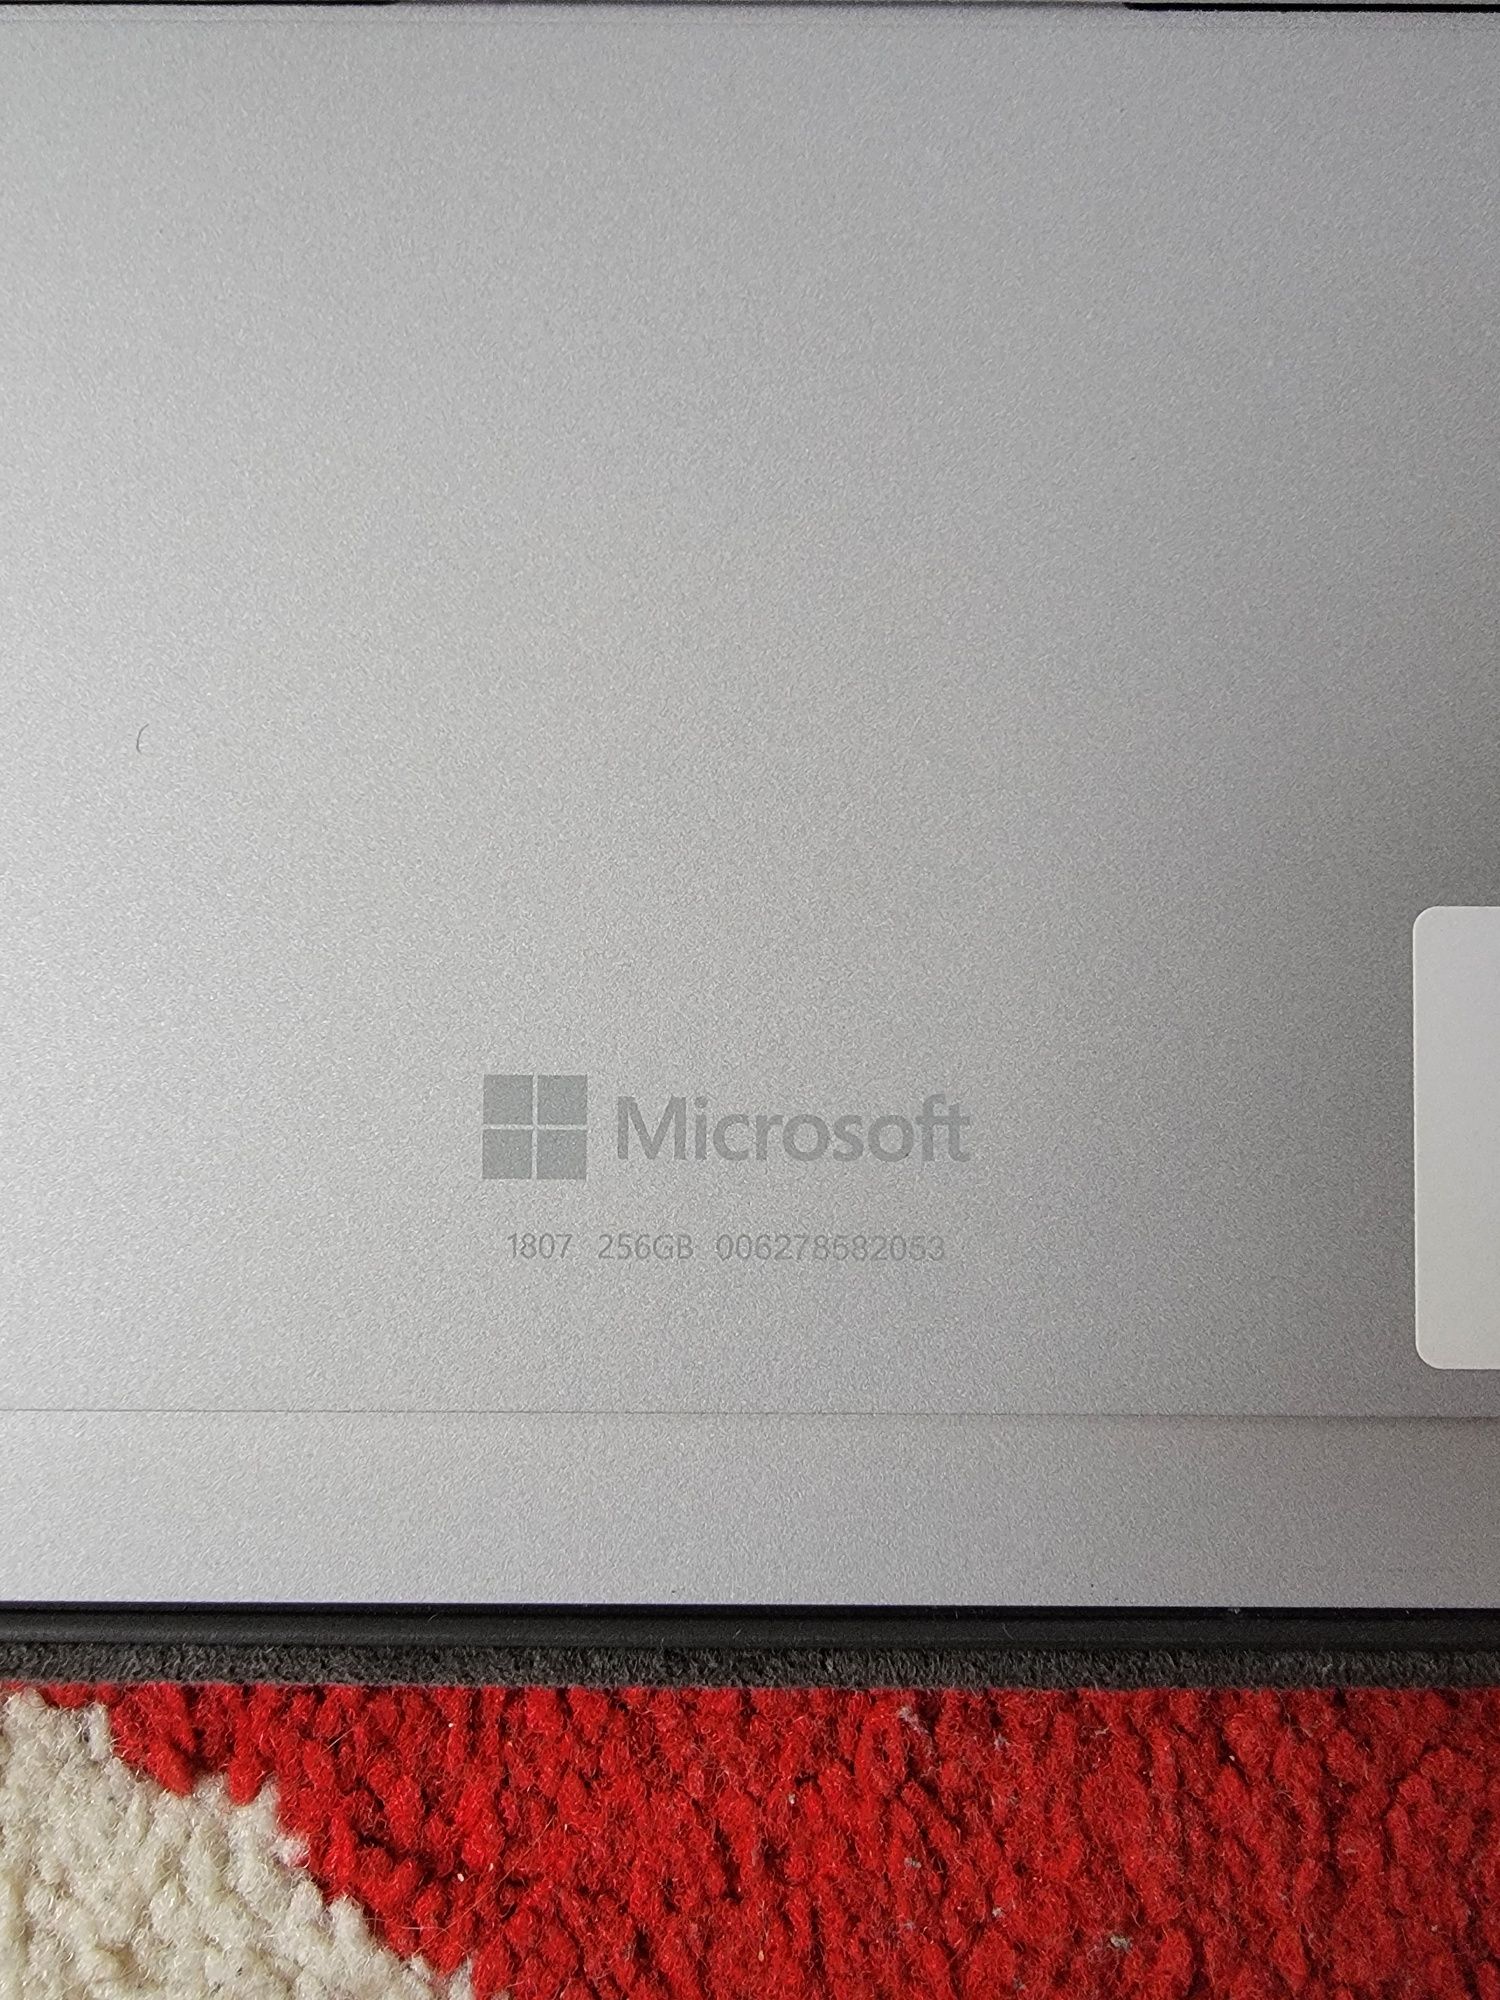 Microsoft Surface Pro 5 4G-LTE (1807)